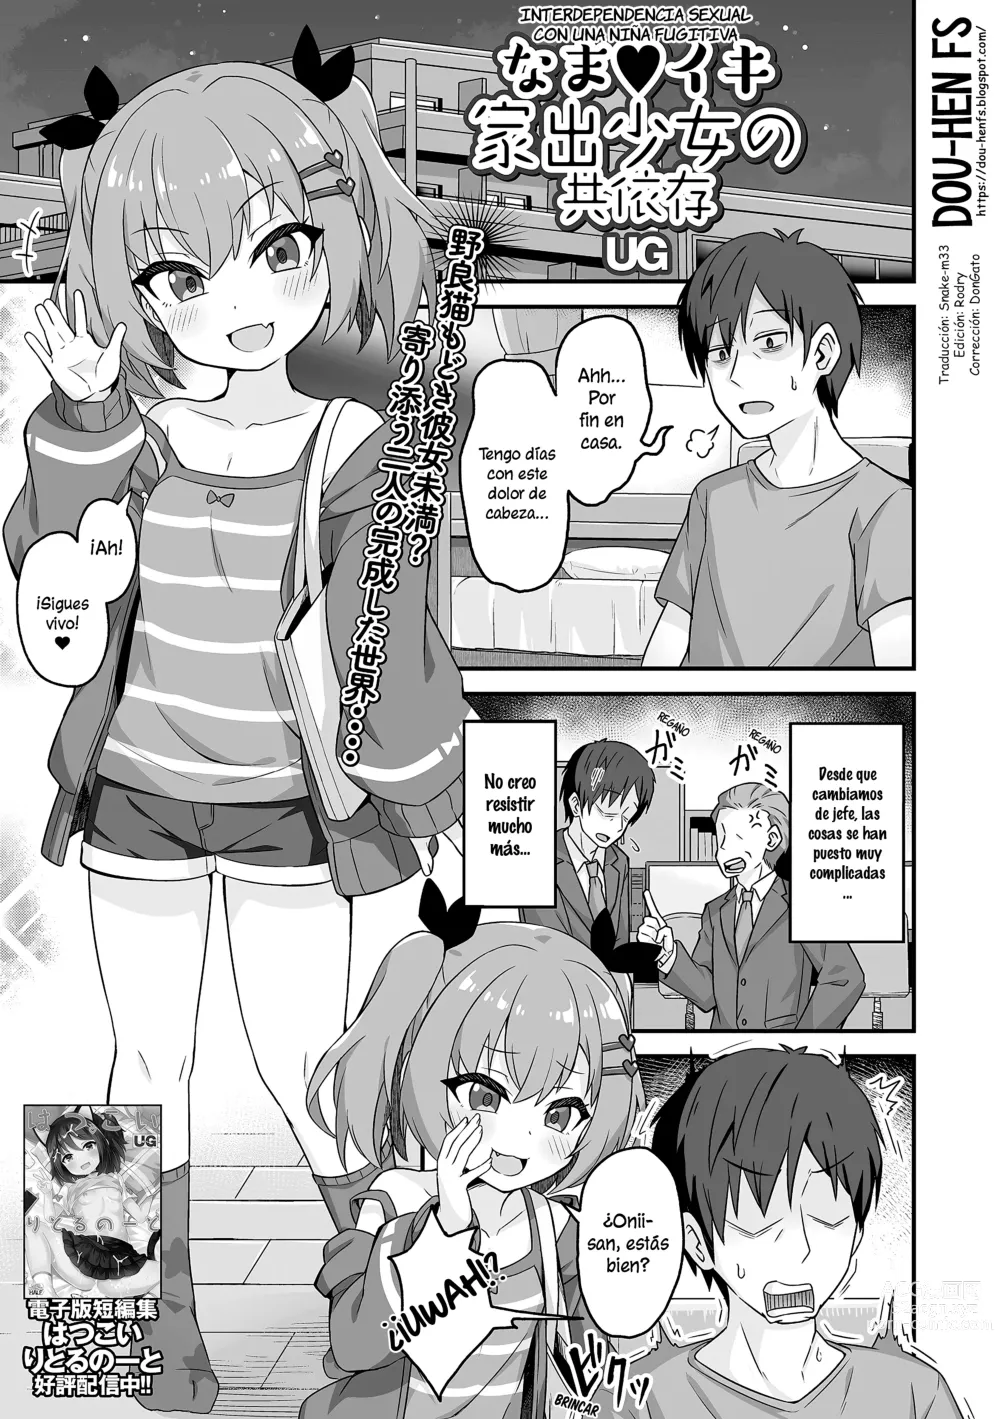 Page 1 of manga Interdependencia sexual con una niña fugitiva